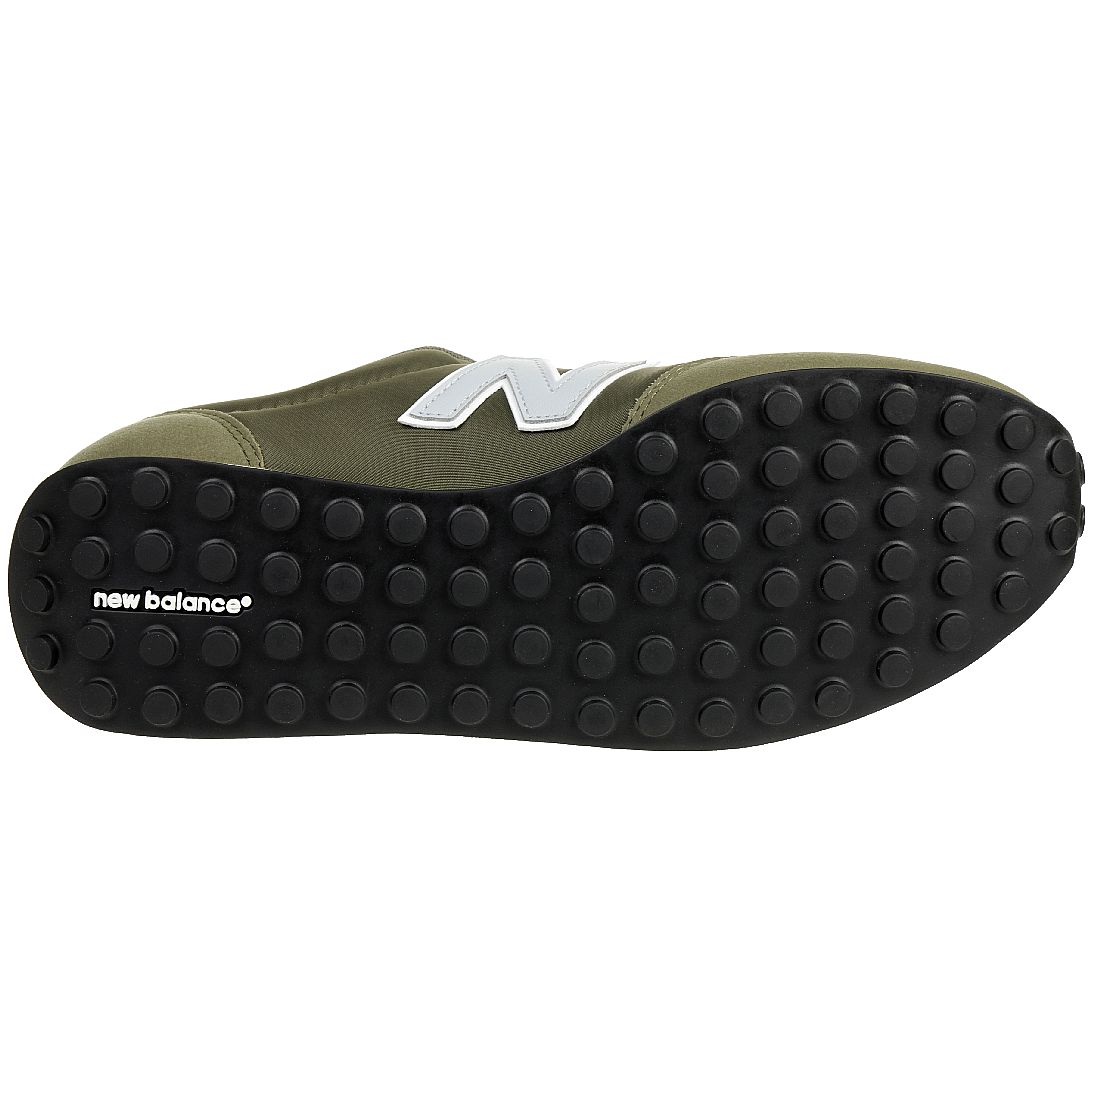 New Balance U410 OLG Sneaker Unisex Schuhe TURNSCHUHE olive